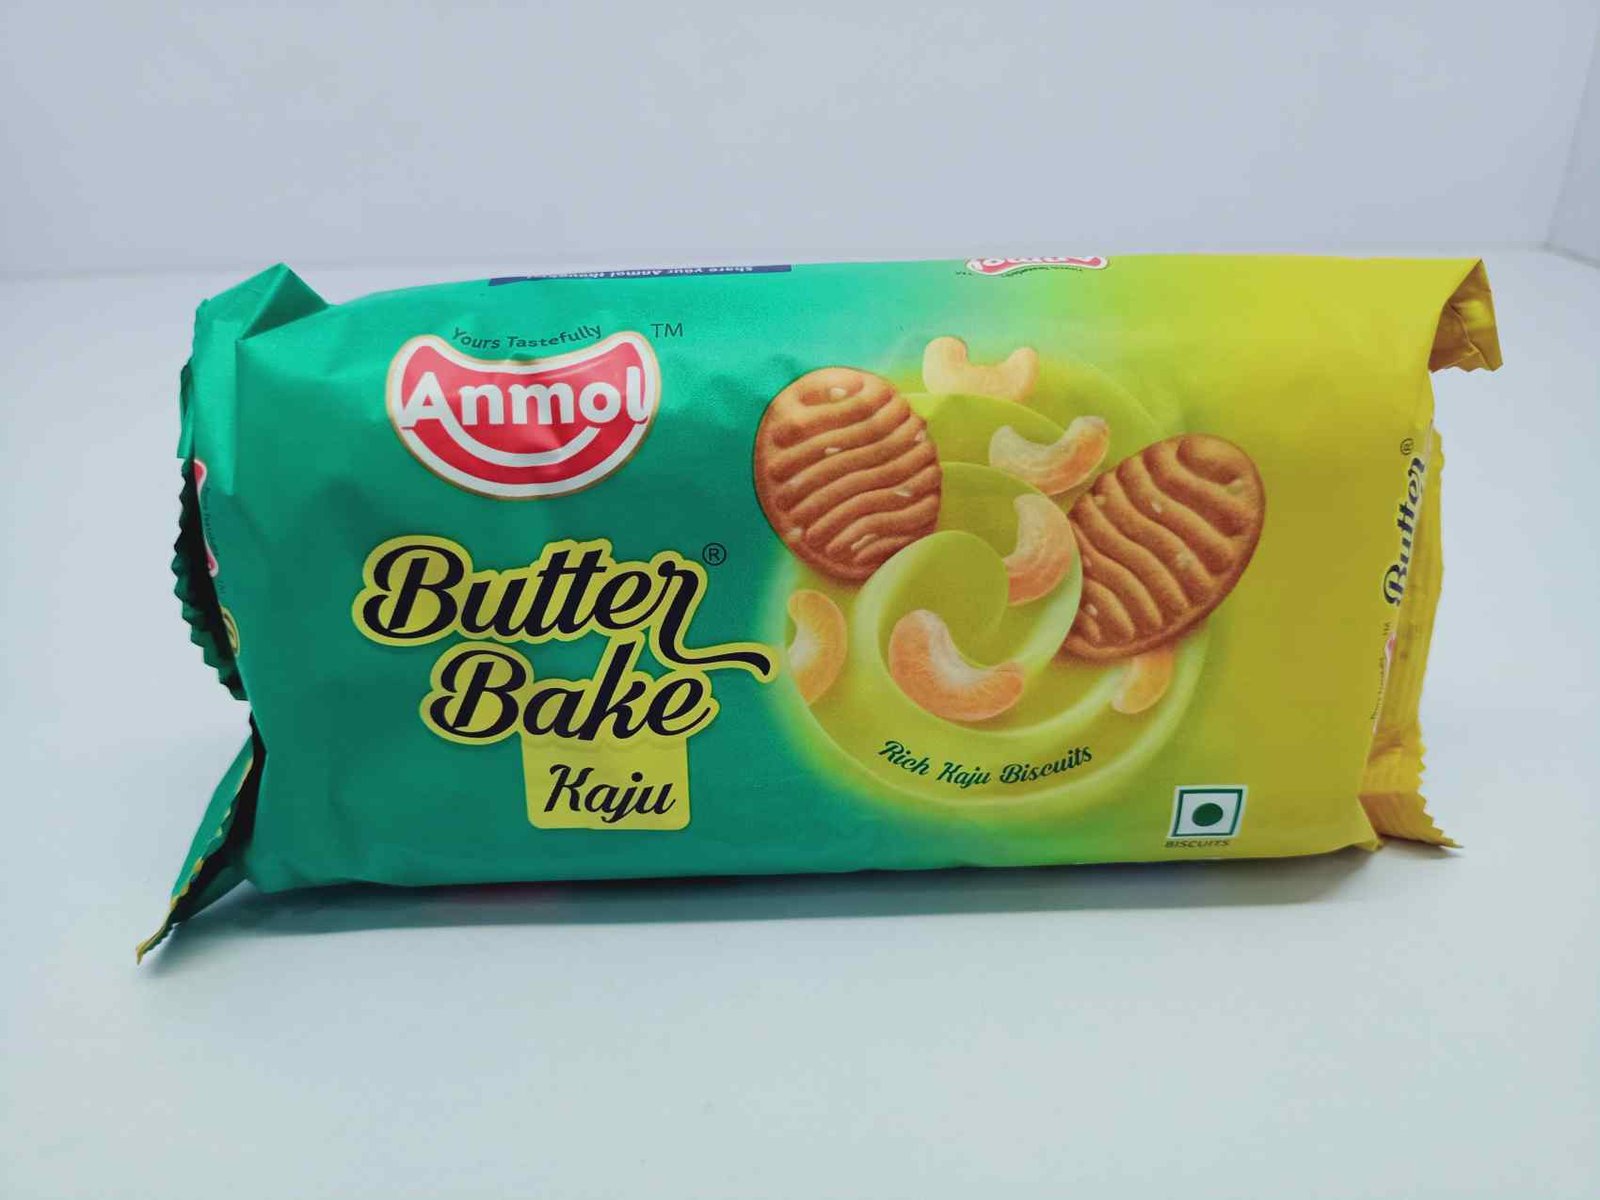 Anmol butter bake Kaju biscuits, 160 gram